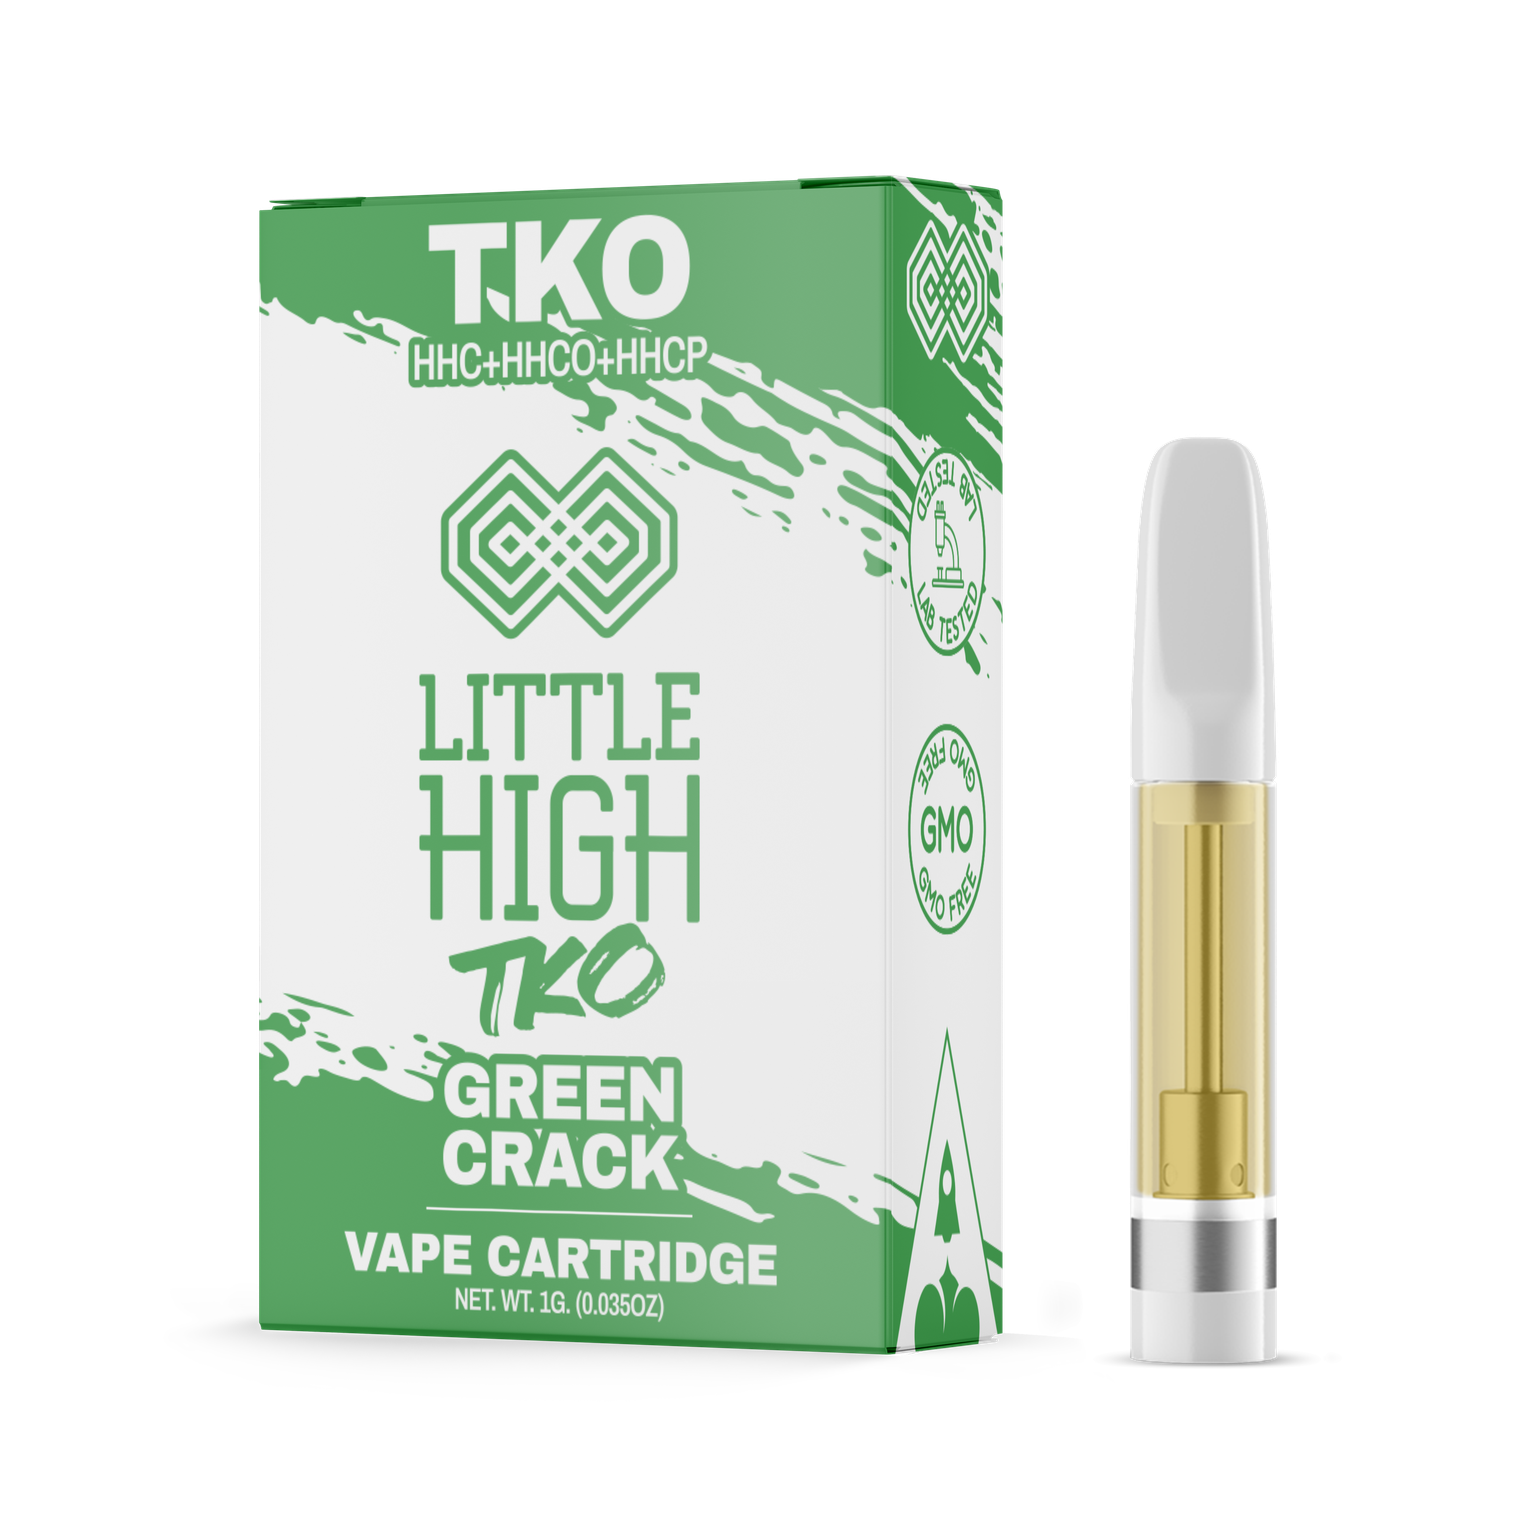 Little High - TKO - Green Crack - SATIVA - 1G x 2 pcs - Cartridge